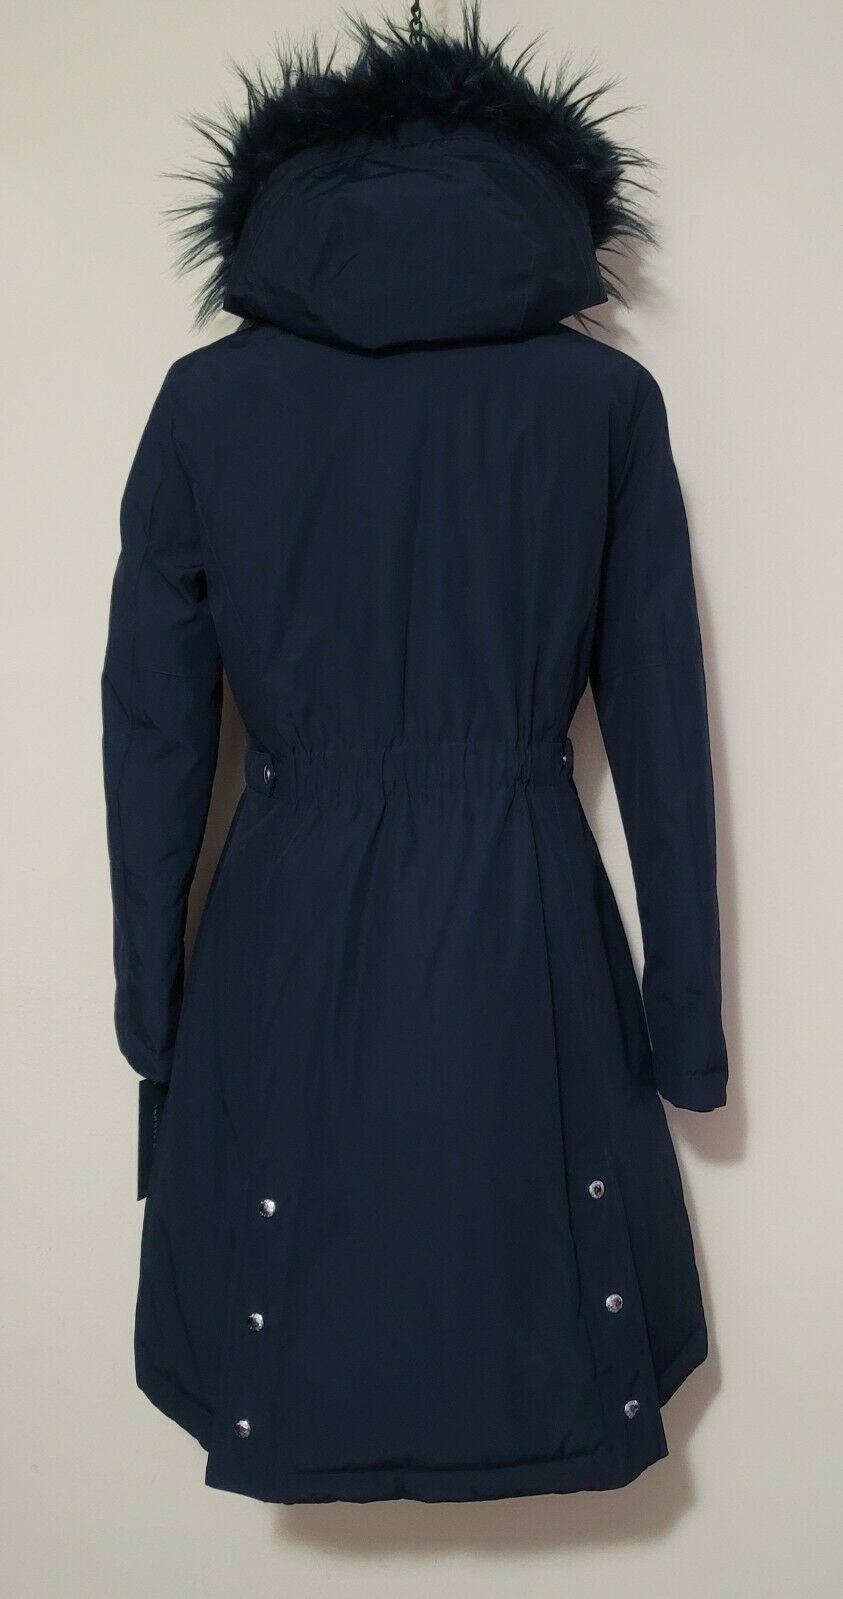 TOMMY HILFIGER Womens Navy Hooded Warm Winter Parka Coat Size S - SVNYFancy